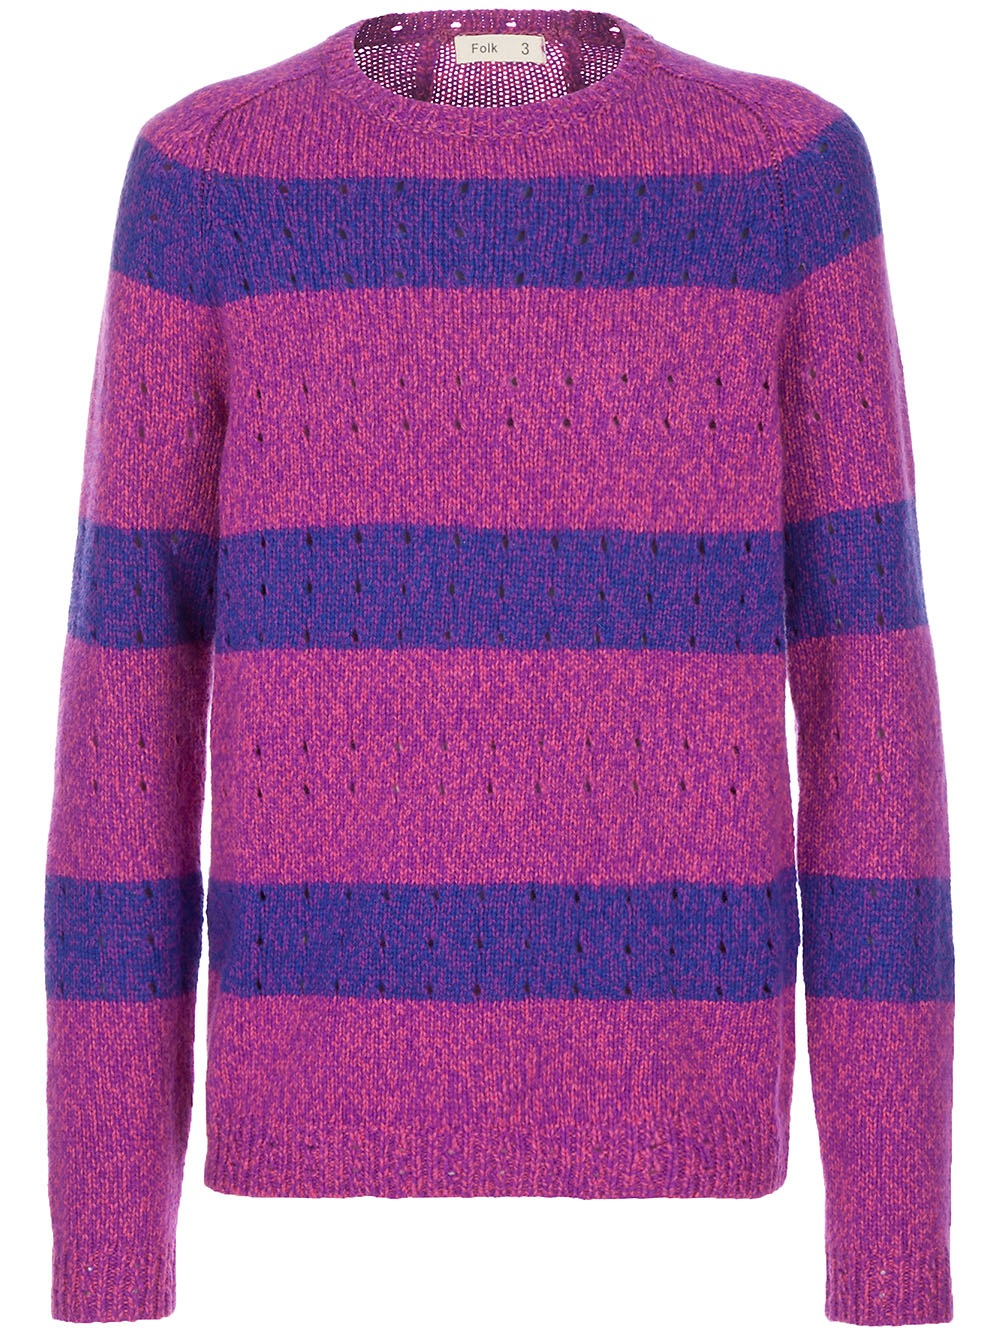 J Crew French Striped Sweater - Gray Cardigan Sweater